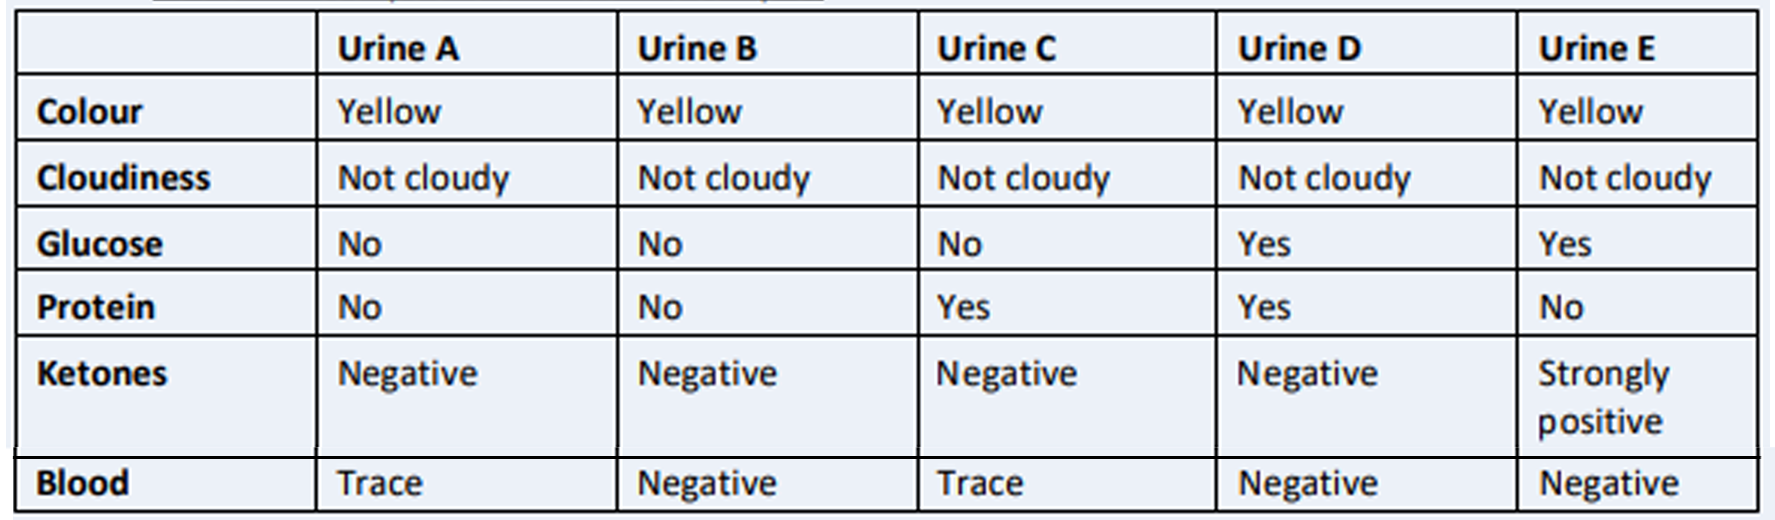 Descriptions of five urine samples